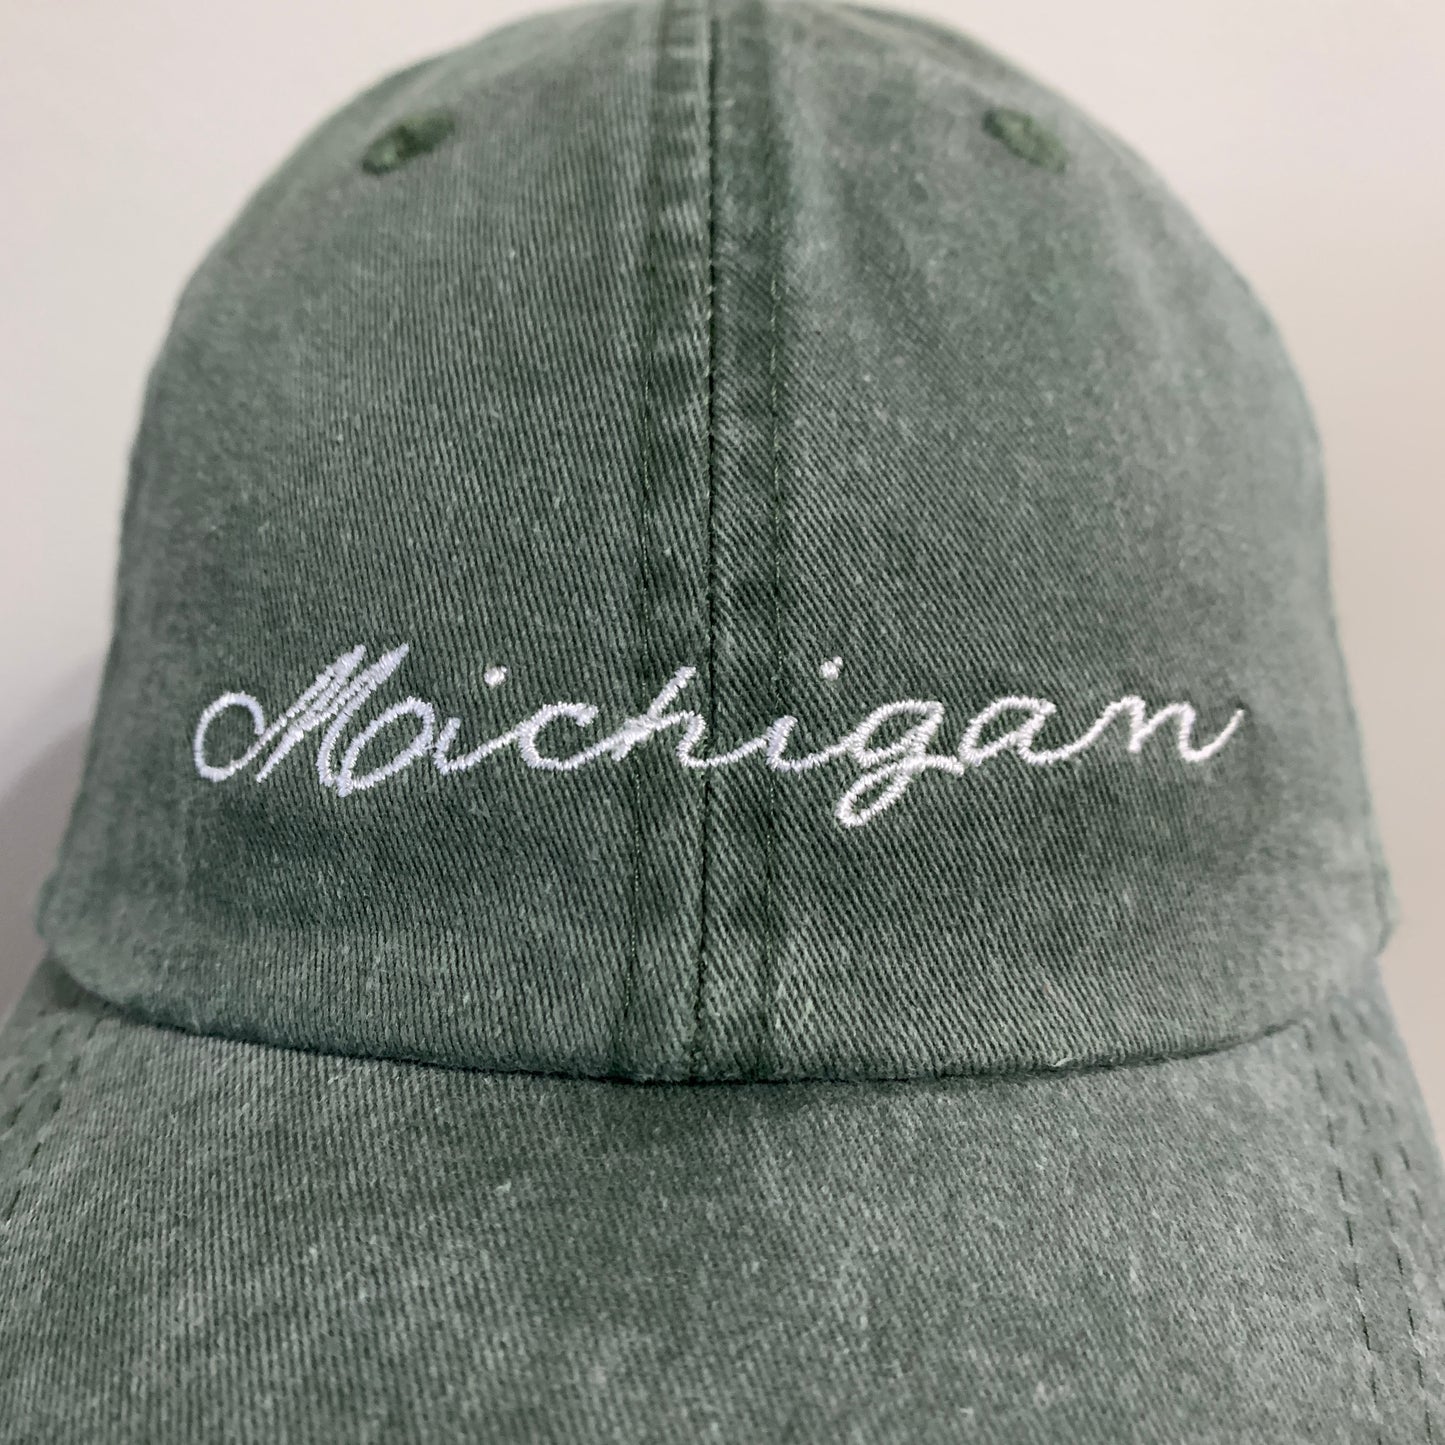 Michigan Baseball Hats